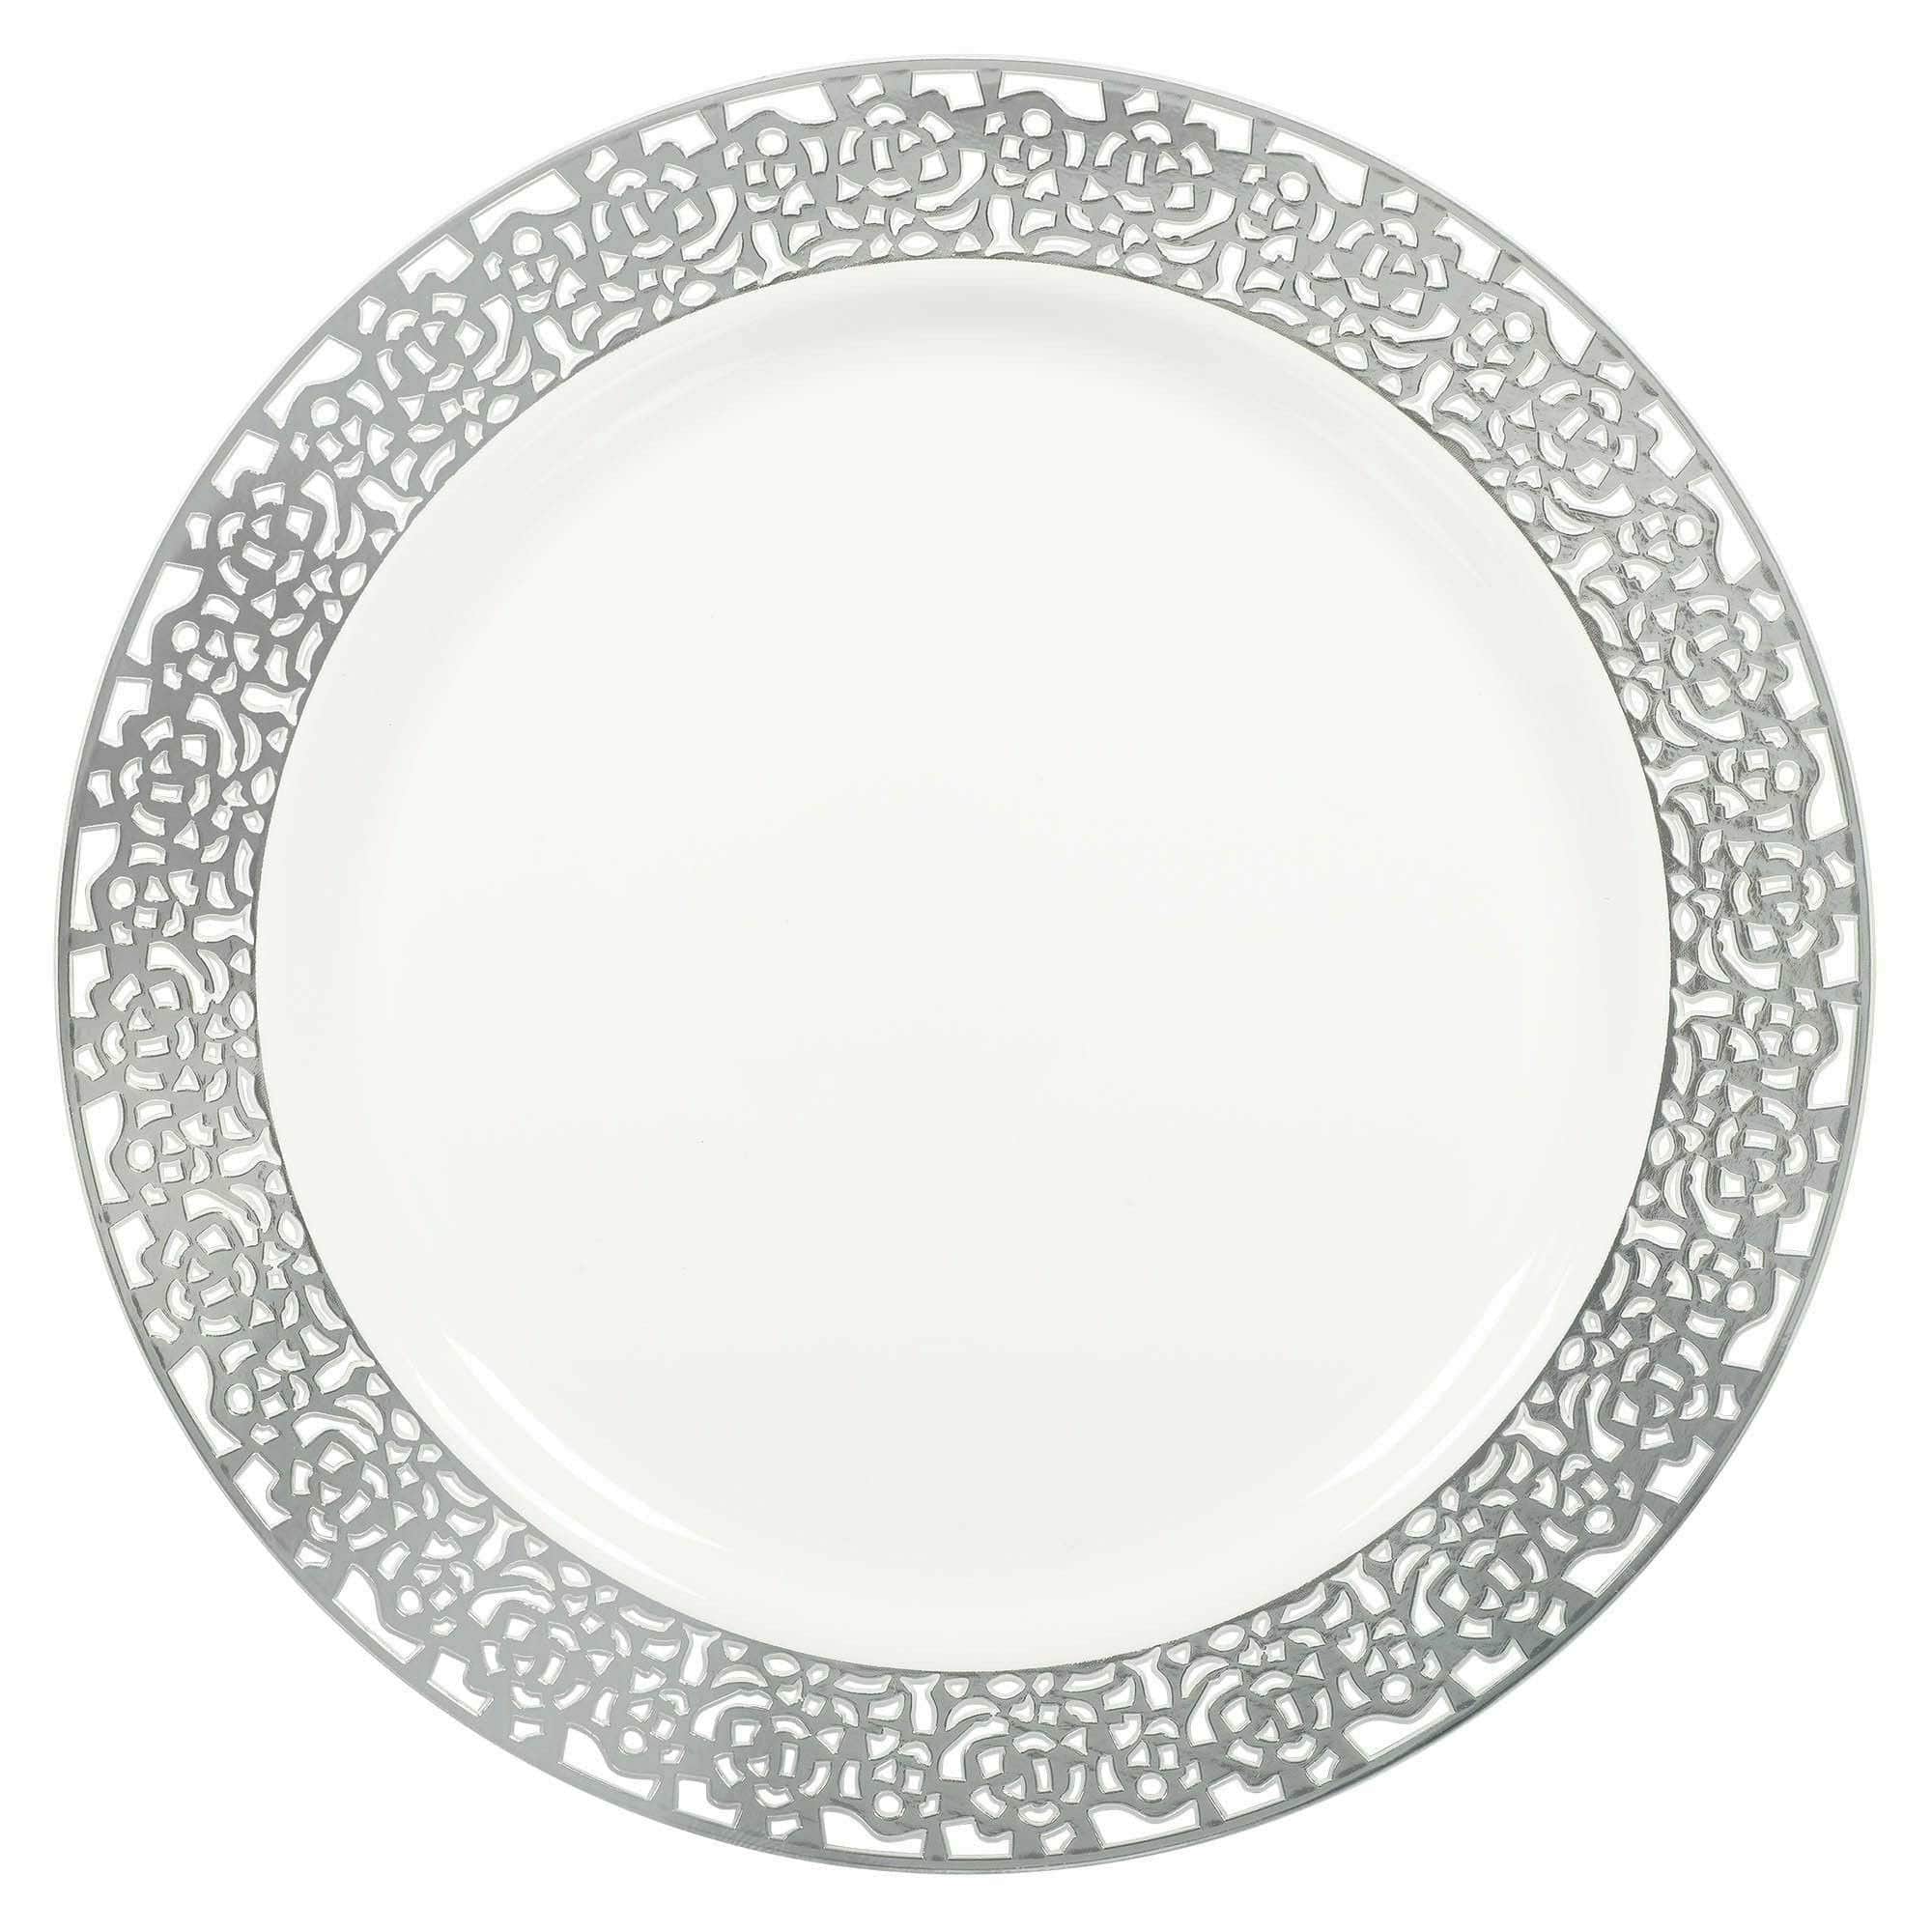 Amscan BASIC White w/Silver Lace Border, Premium Plastic Plates, 7 1/2"